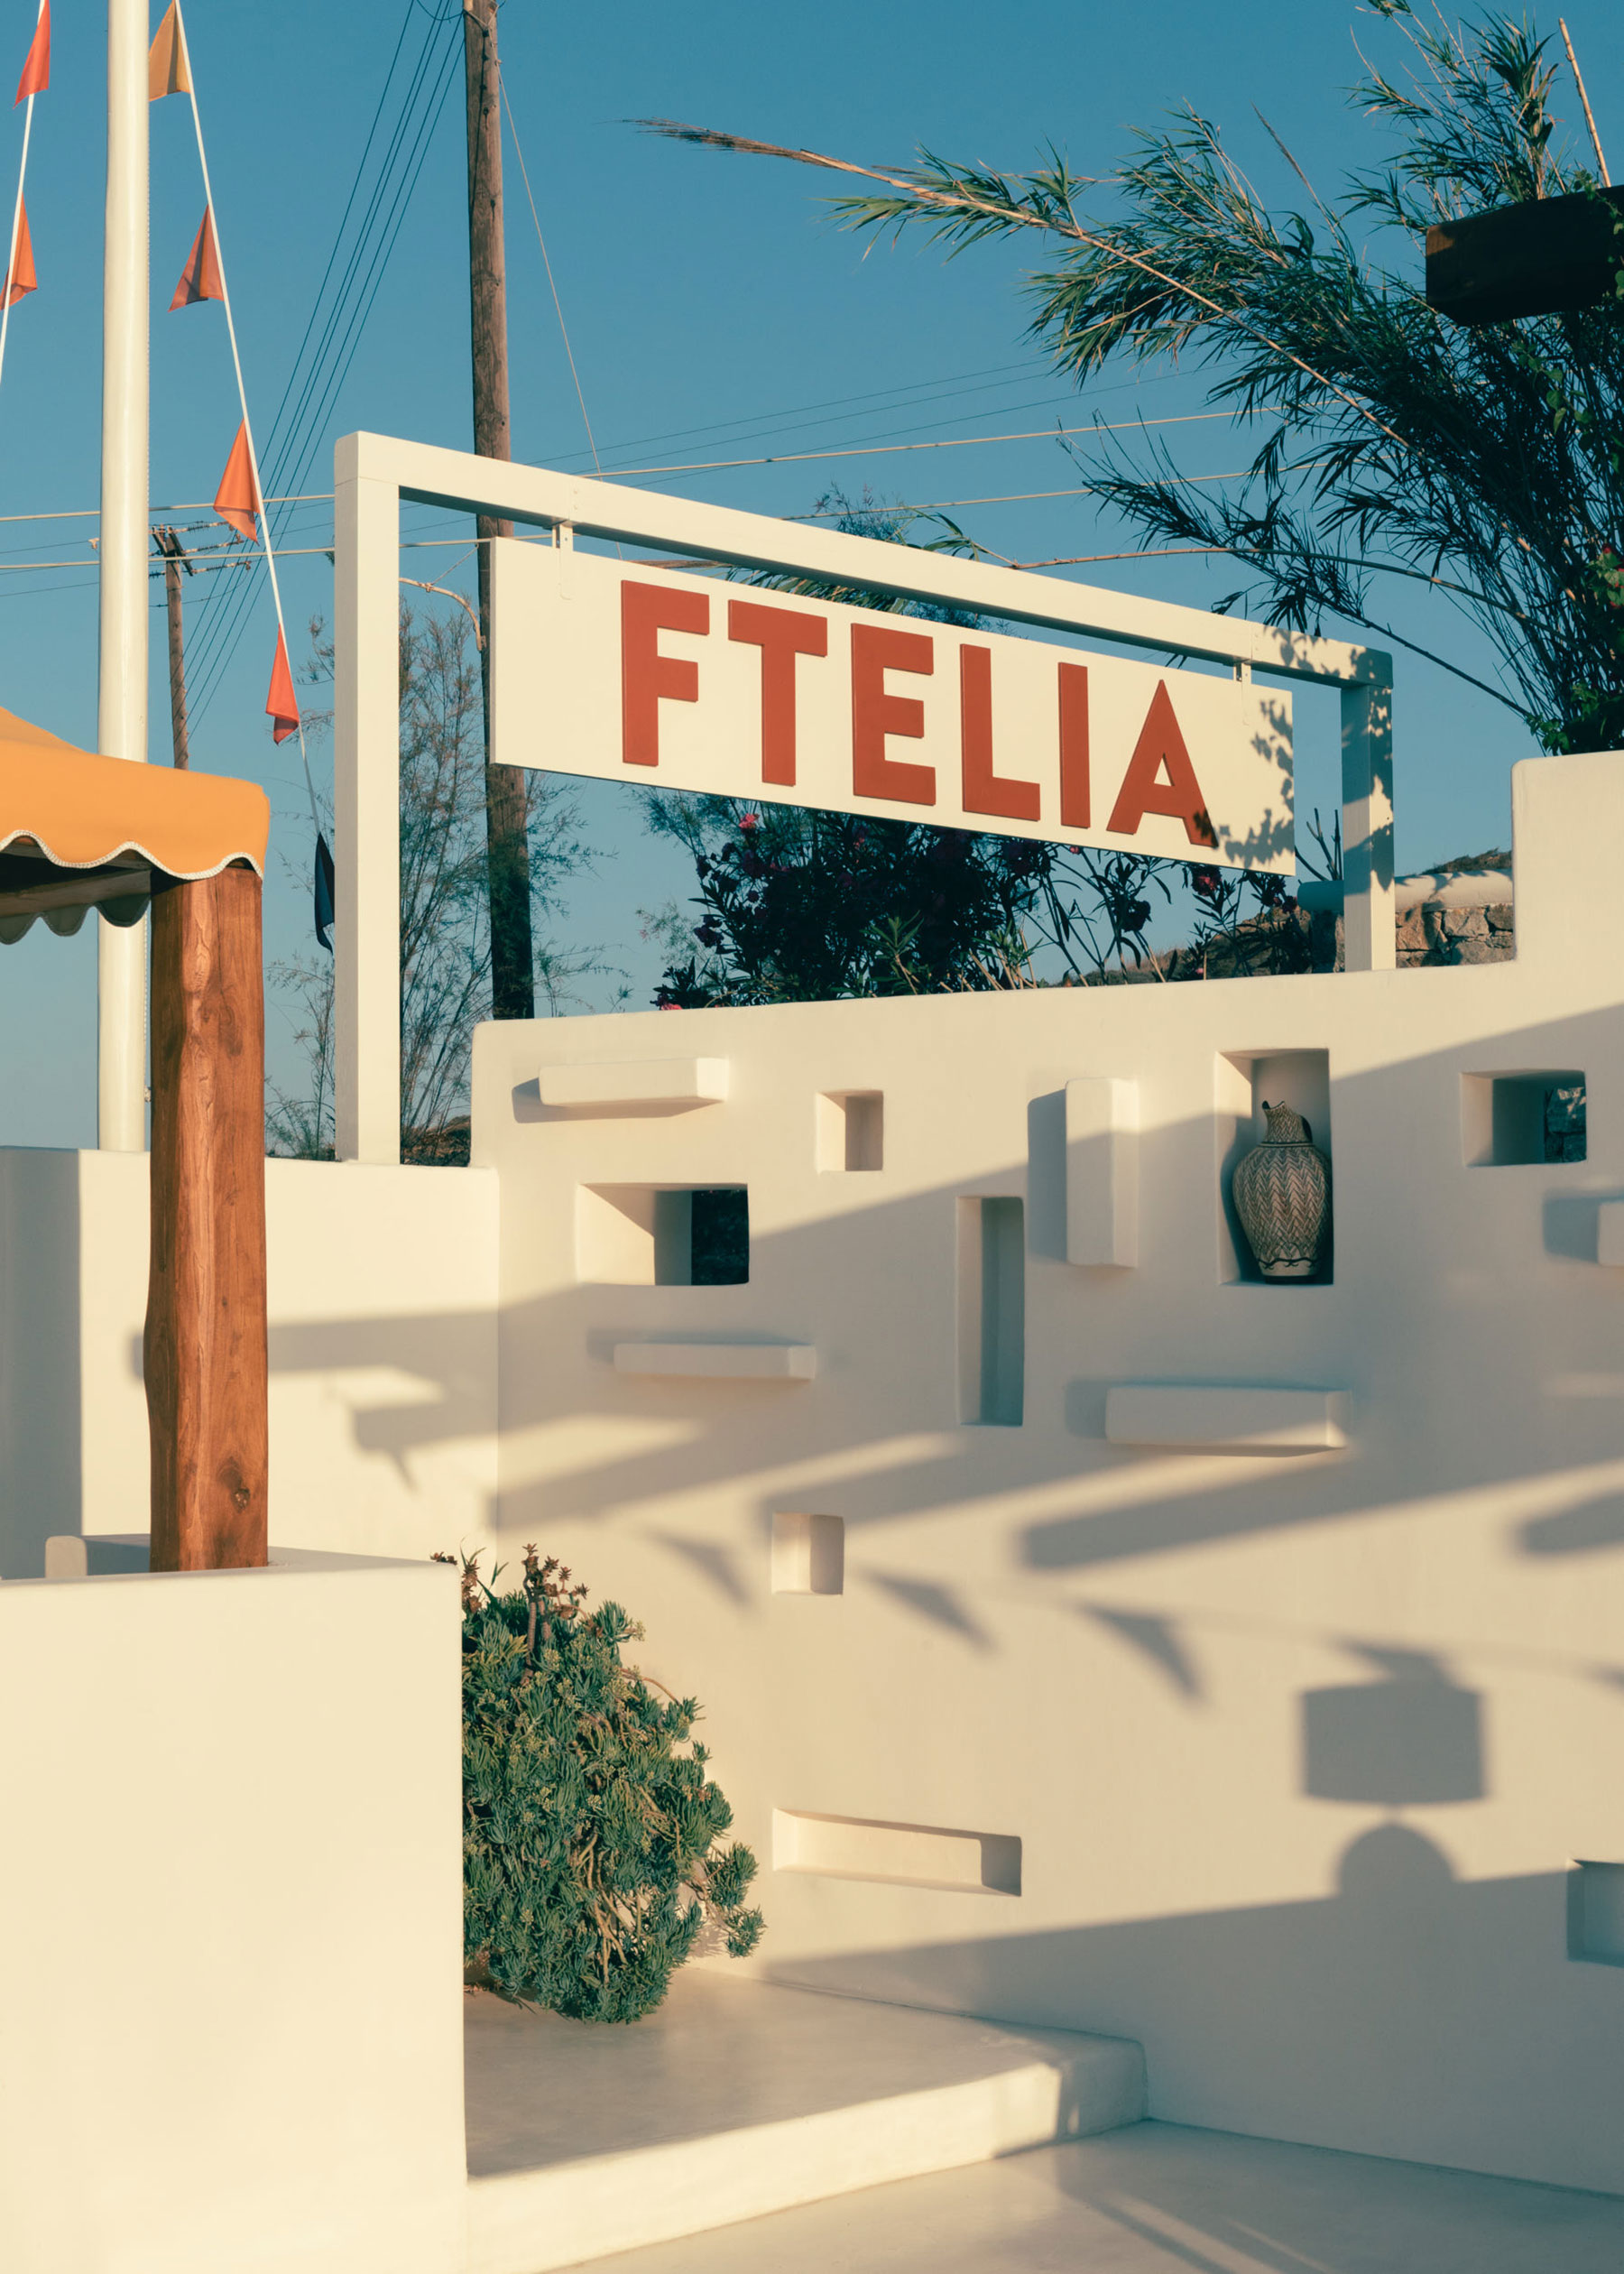 Ftelia Beach Club - Gessato